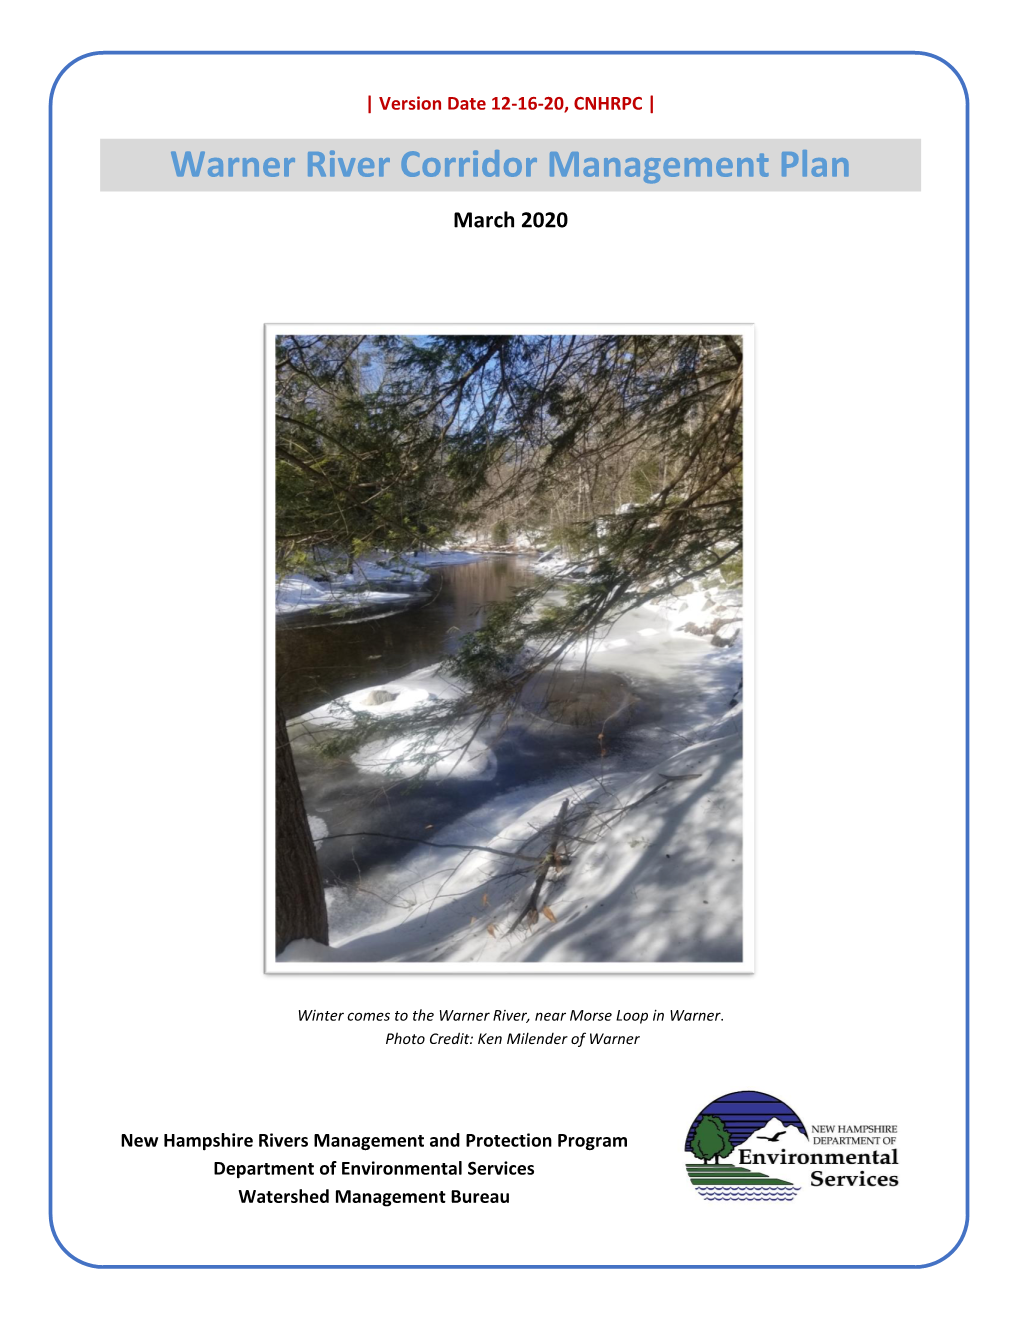 Draft Warner River Corridor Management Plan